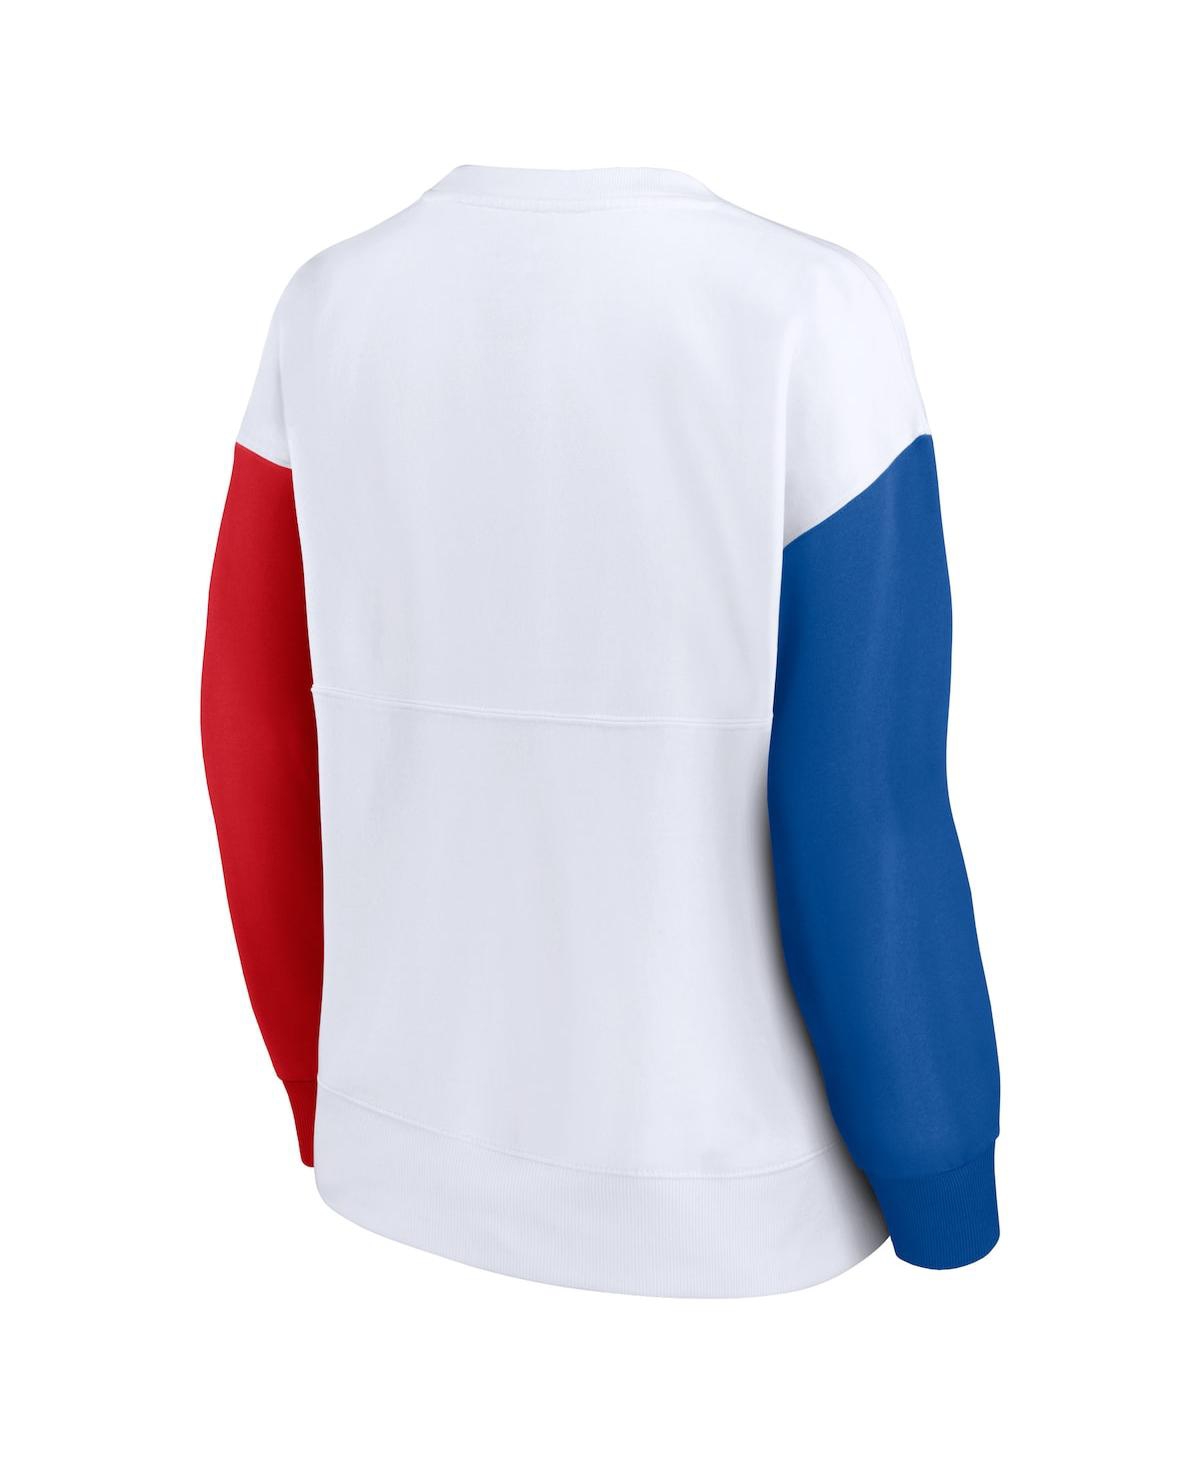 Shop Fanatics Women's  White Chicago Cubs Series Pullover Sweatshirt